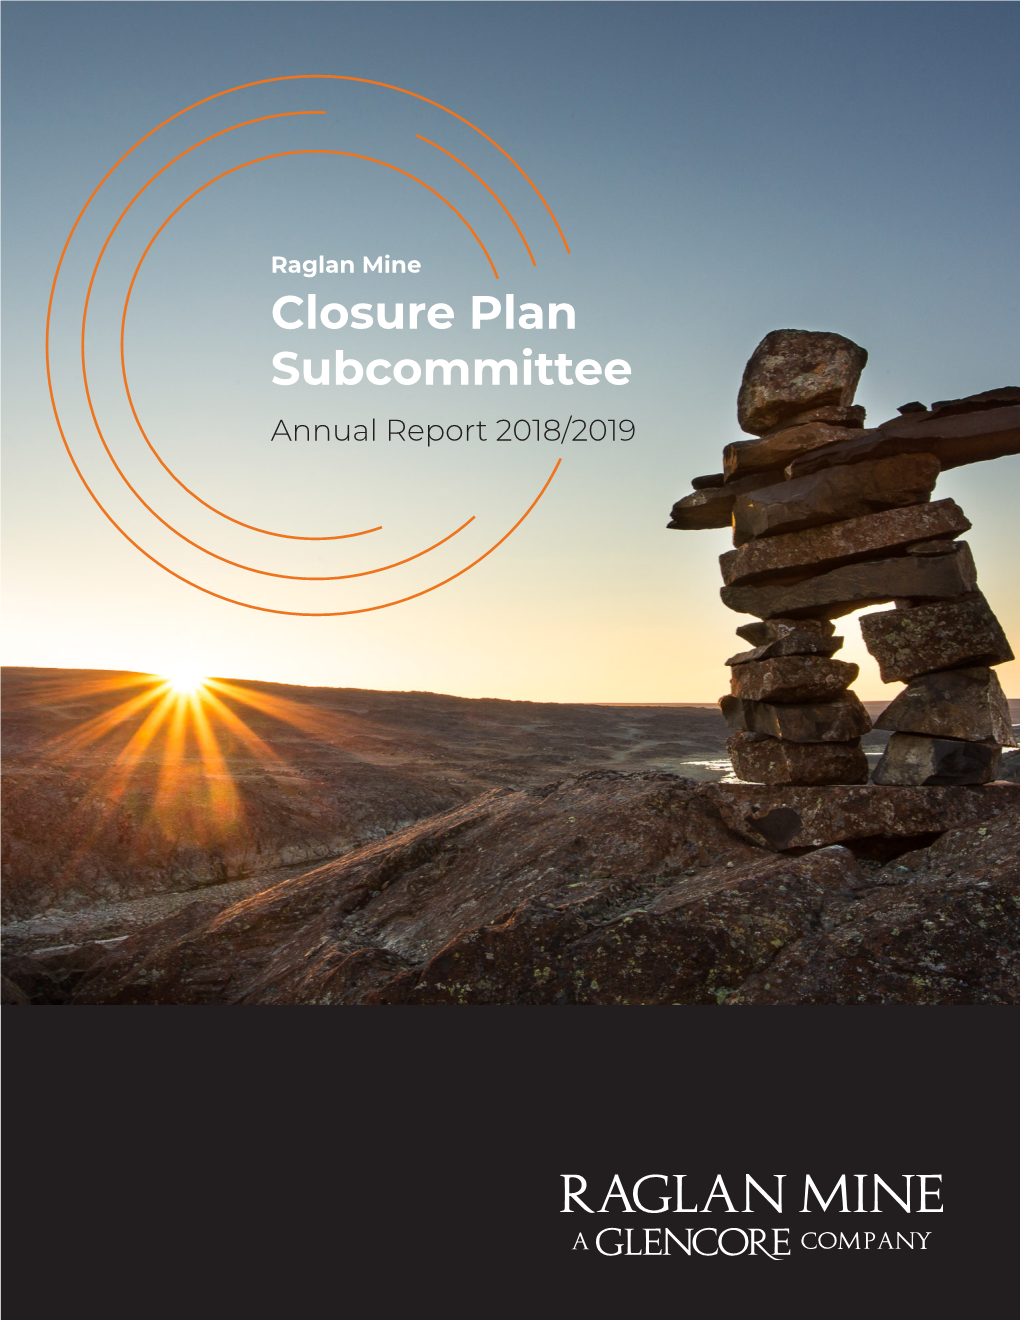 Raglan Mine Closure Plan Subcommittee Annual Report 2018/2019 the First Annual Report for the Raglan Mine Closure Plan Subcommittee for the Years of 2018 and 2019